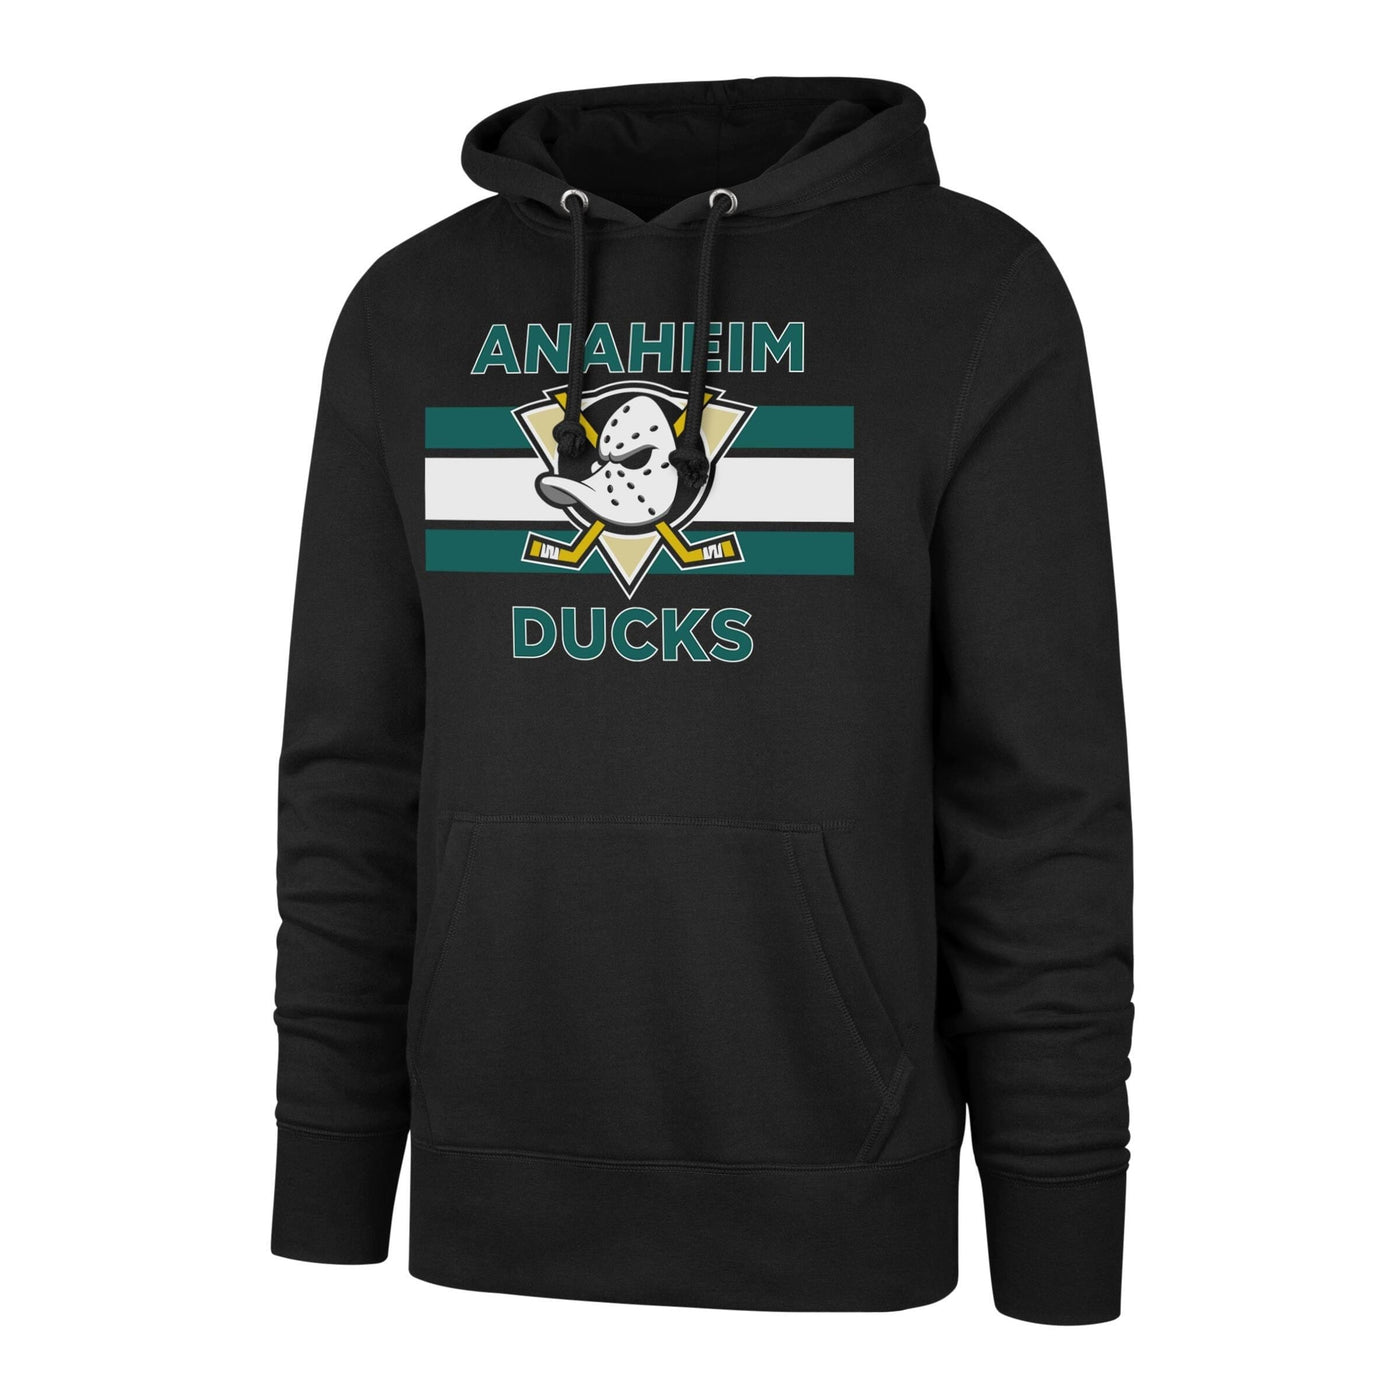 NHL Anaheim Ducks Burnside Imprint Hoodie Black/Teal